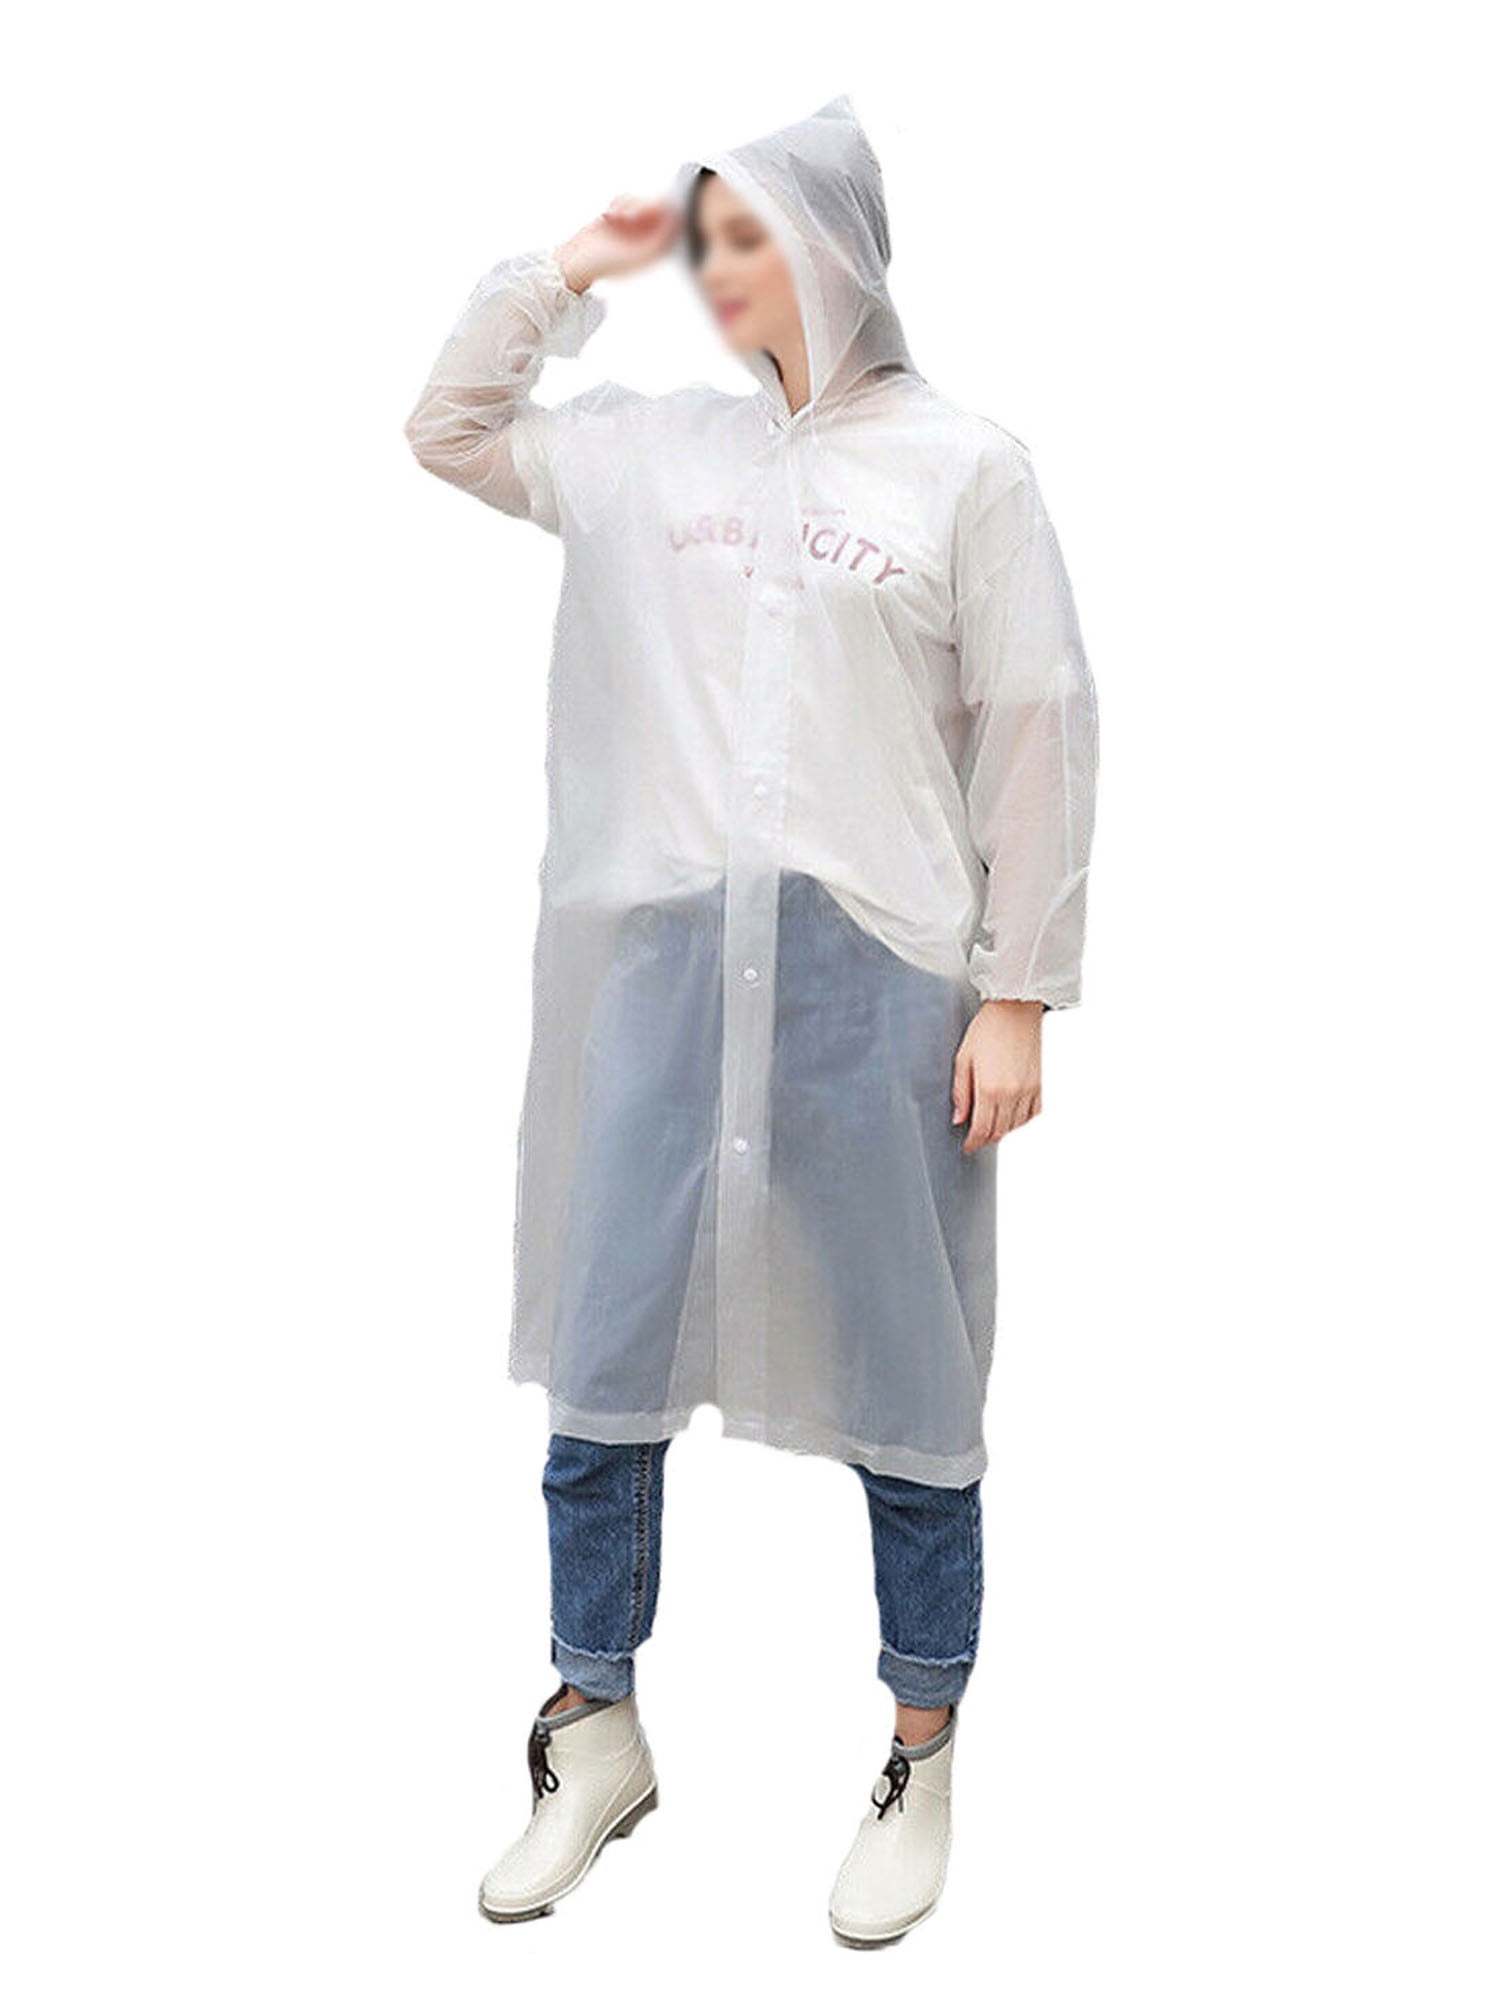 UnisexWaterproof Jacket Clear PVC Raincoat Rain Coat Hooded Poncho Rainwear